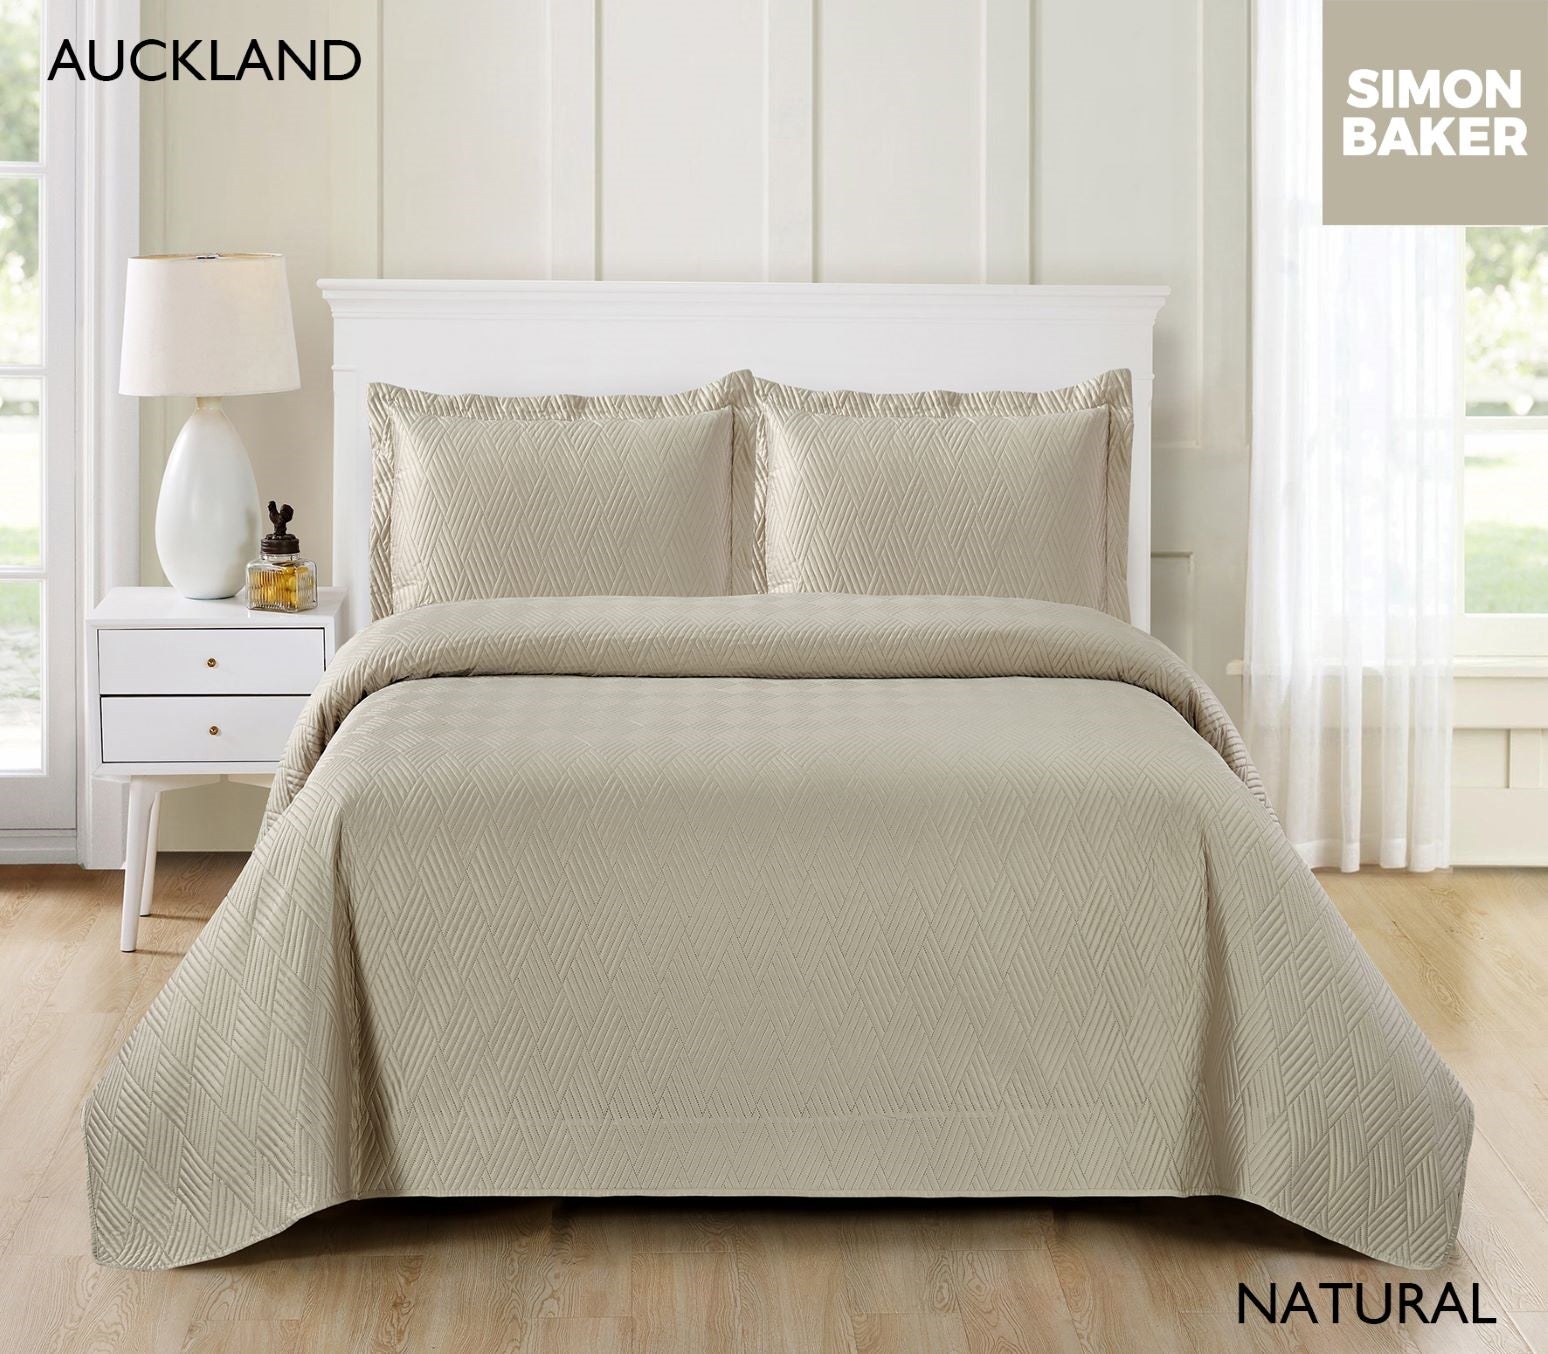 Simon Baker | Auckland Quilt Bedspread - Natural (Various Sizes) 